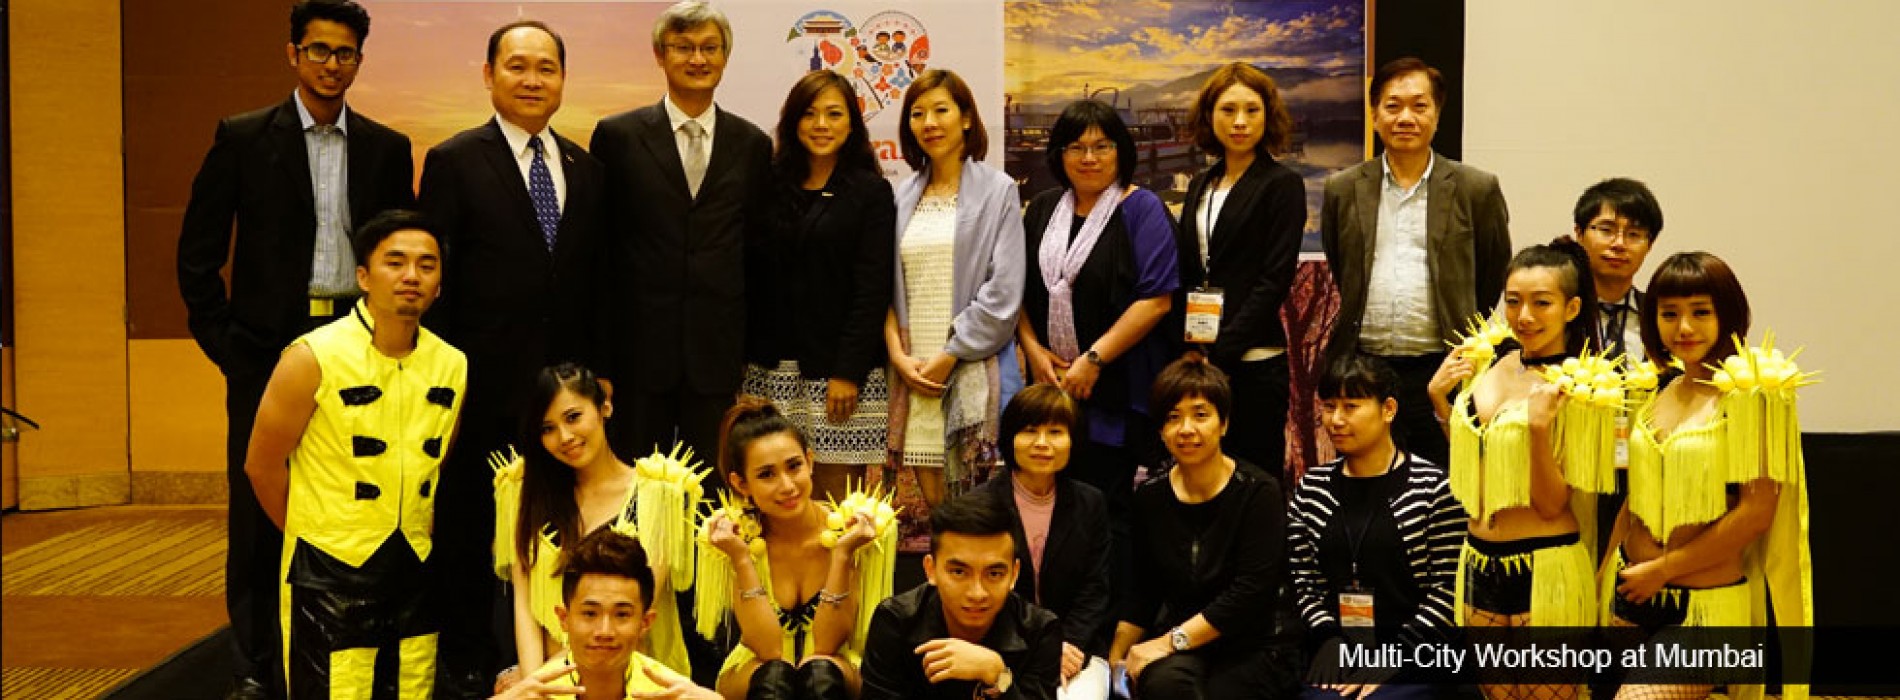 Taiwan Tourism Bureau kicks off 2016 with a multi-city workshop